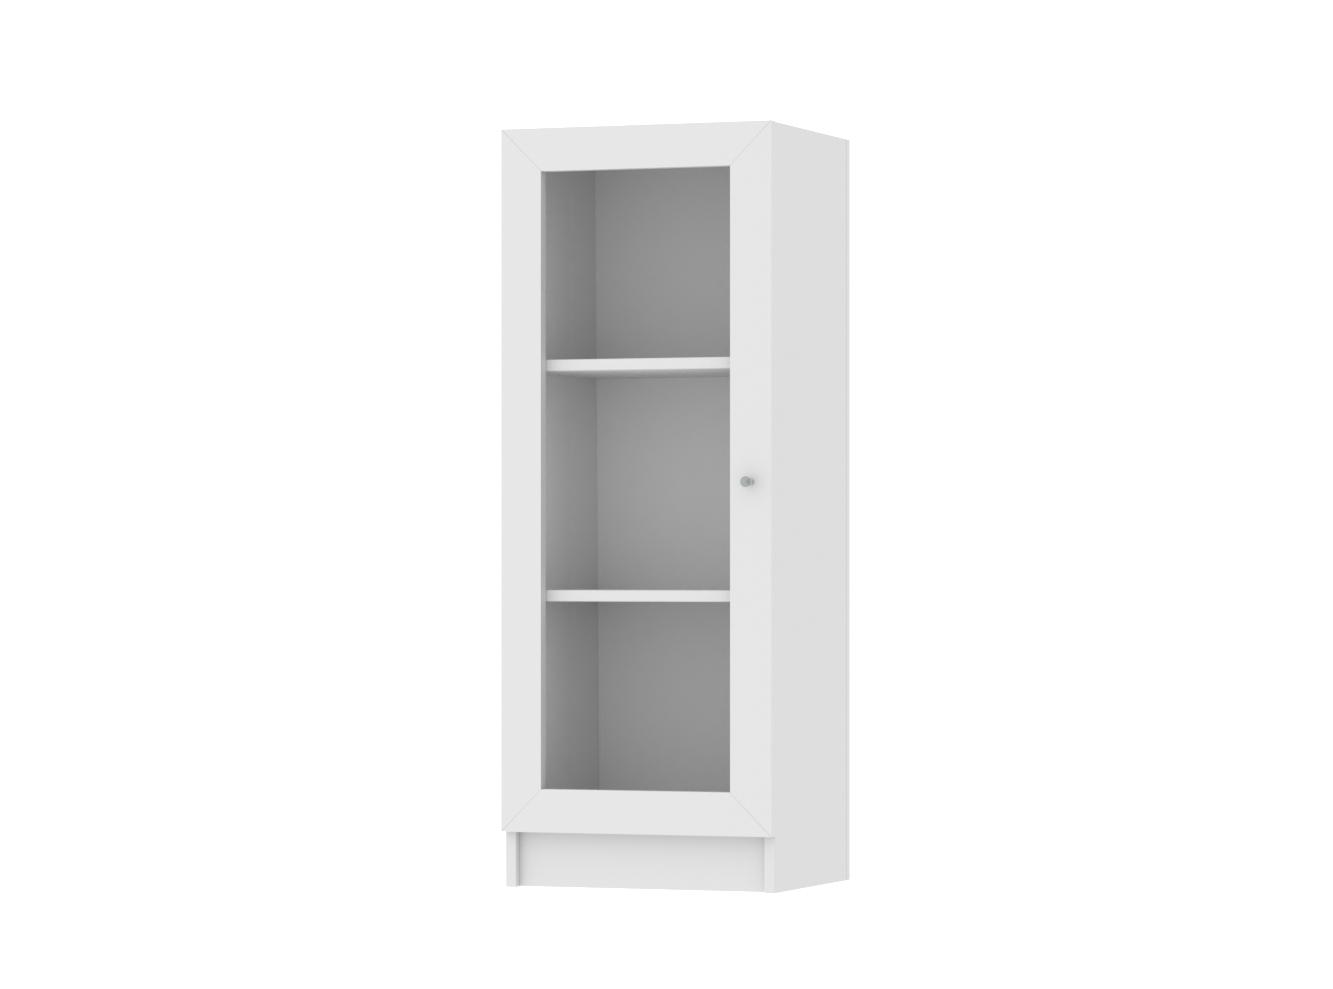  Книжный шкаф Билли 418 white ИКЕА (IKEA) изображение товара